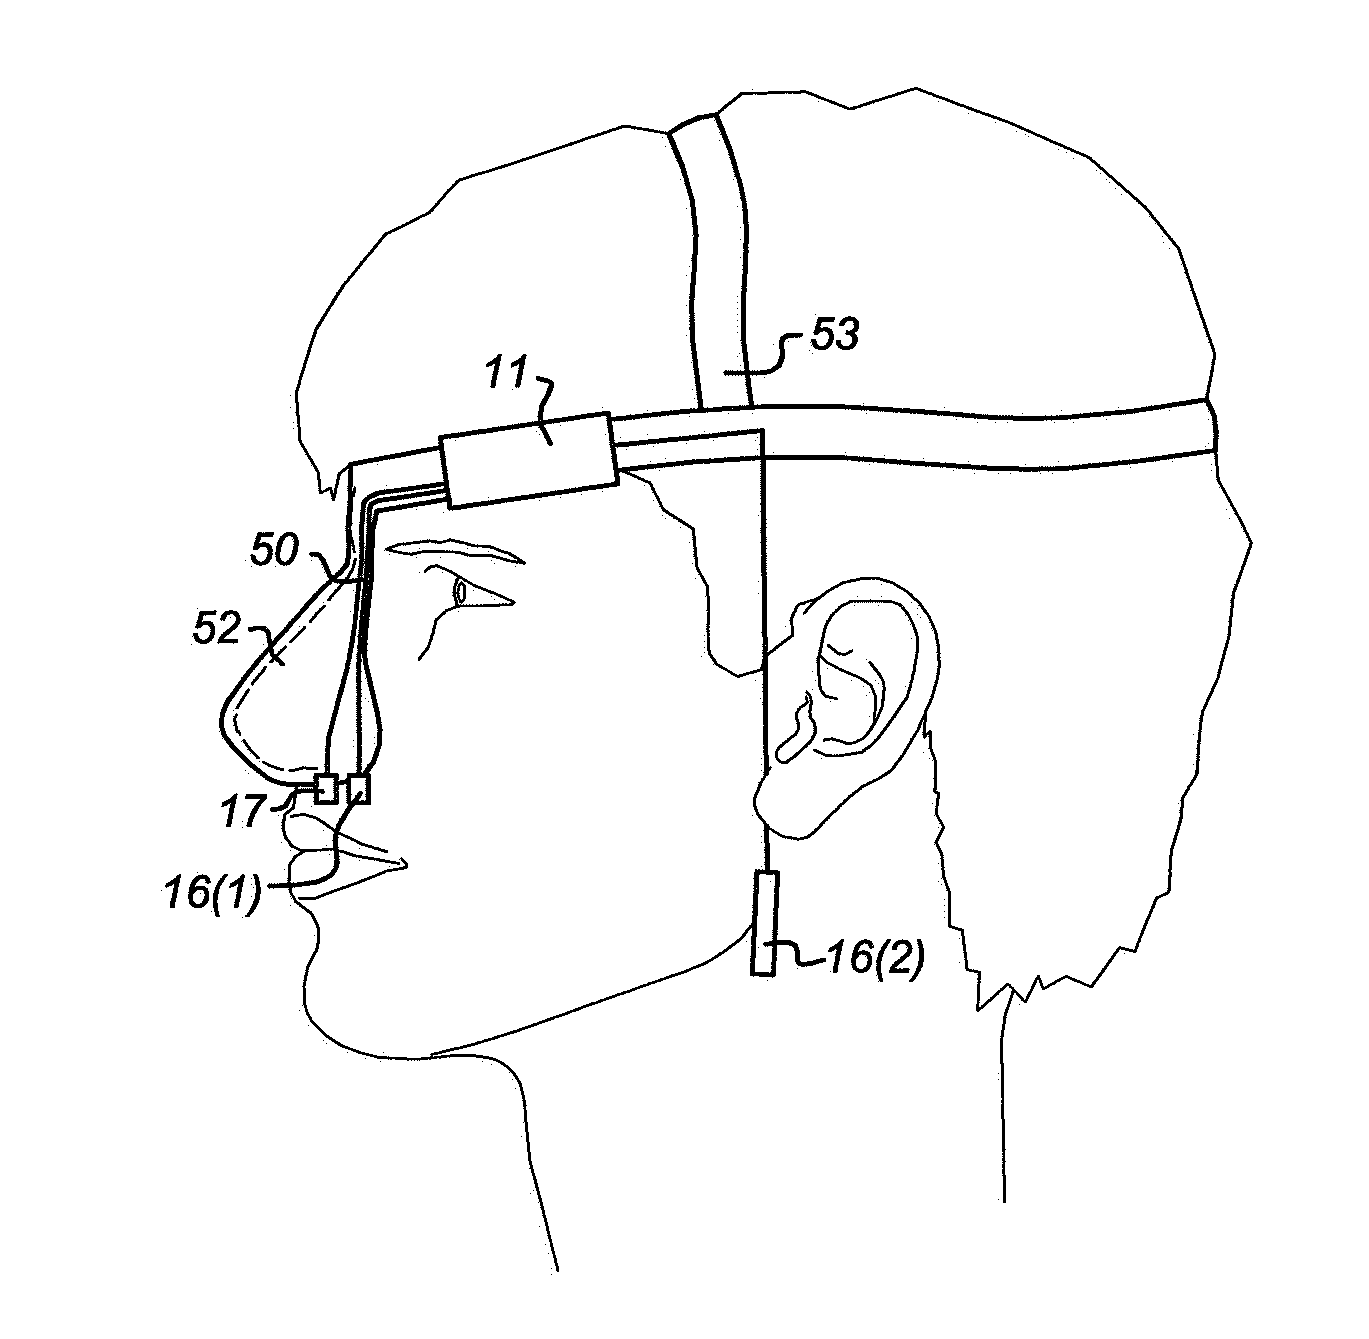 Nose stimulator for producing a stimulation signal to a nose